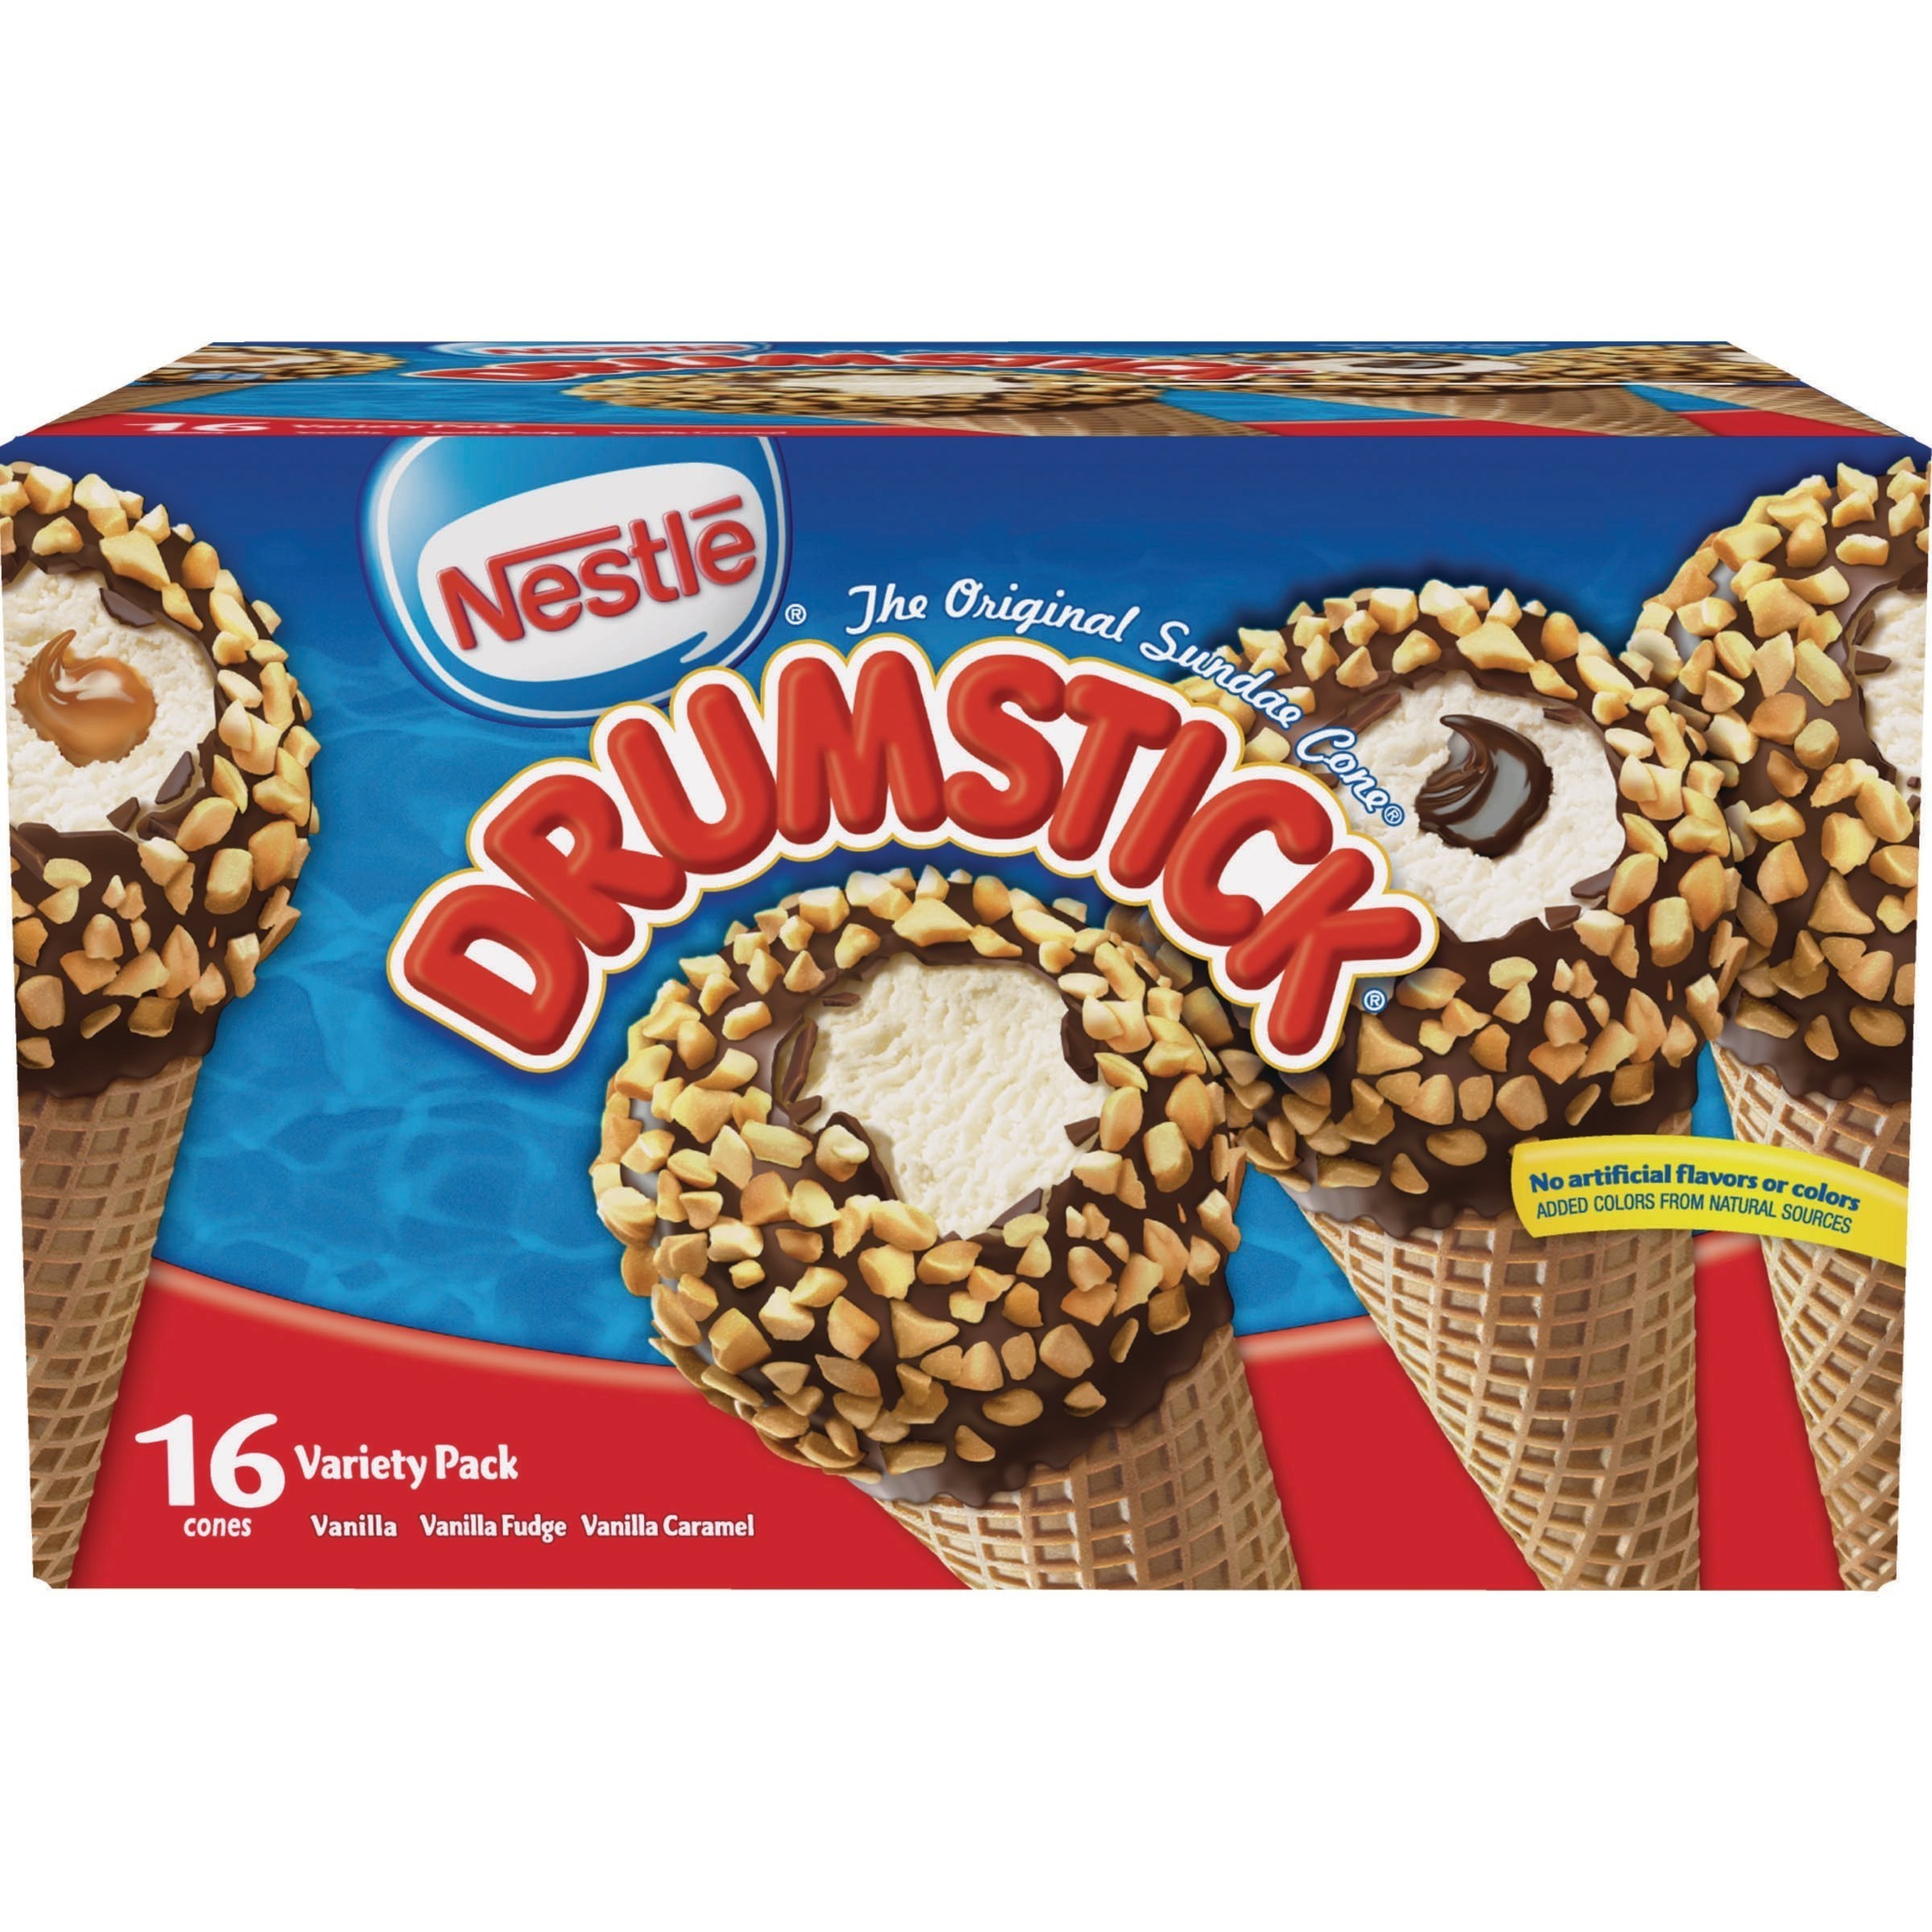 Nestle(R) Drumstick(R) Cones Club Pack (4.6 fl oz US)